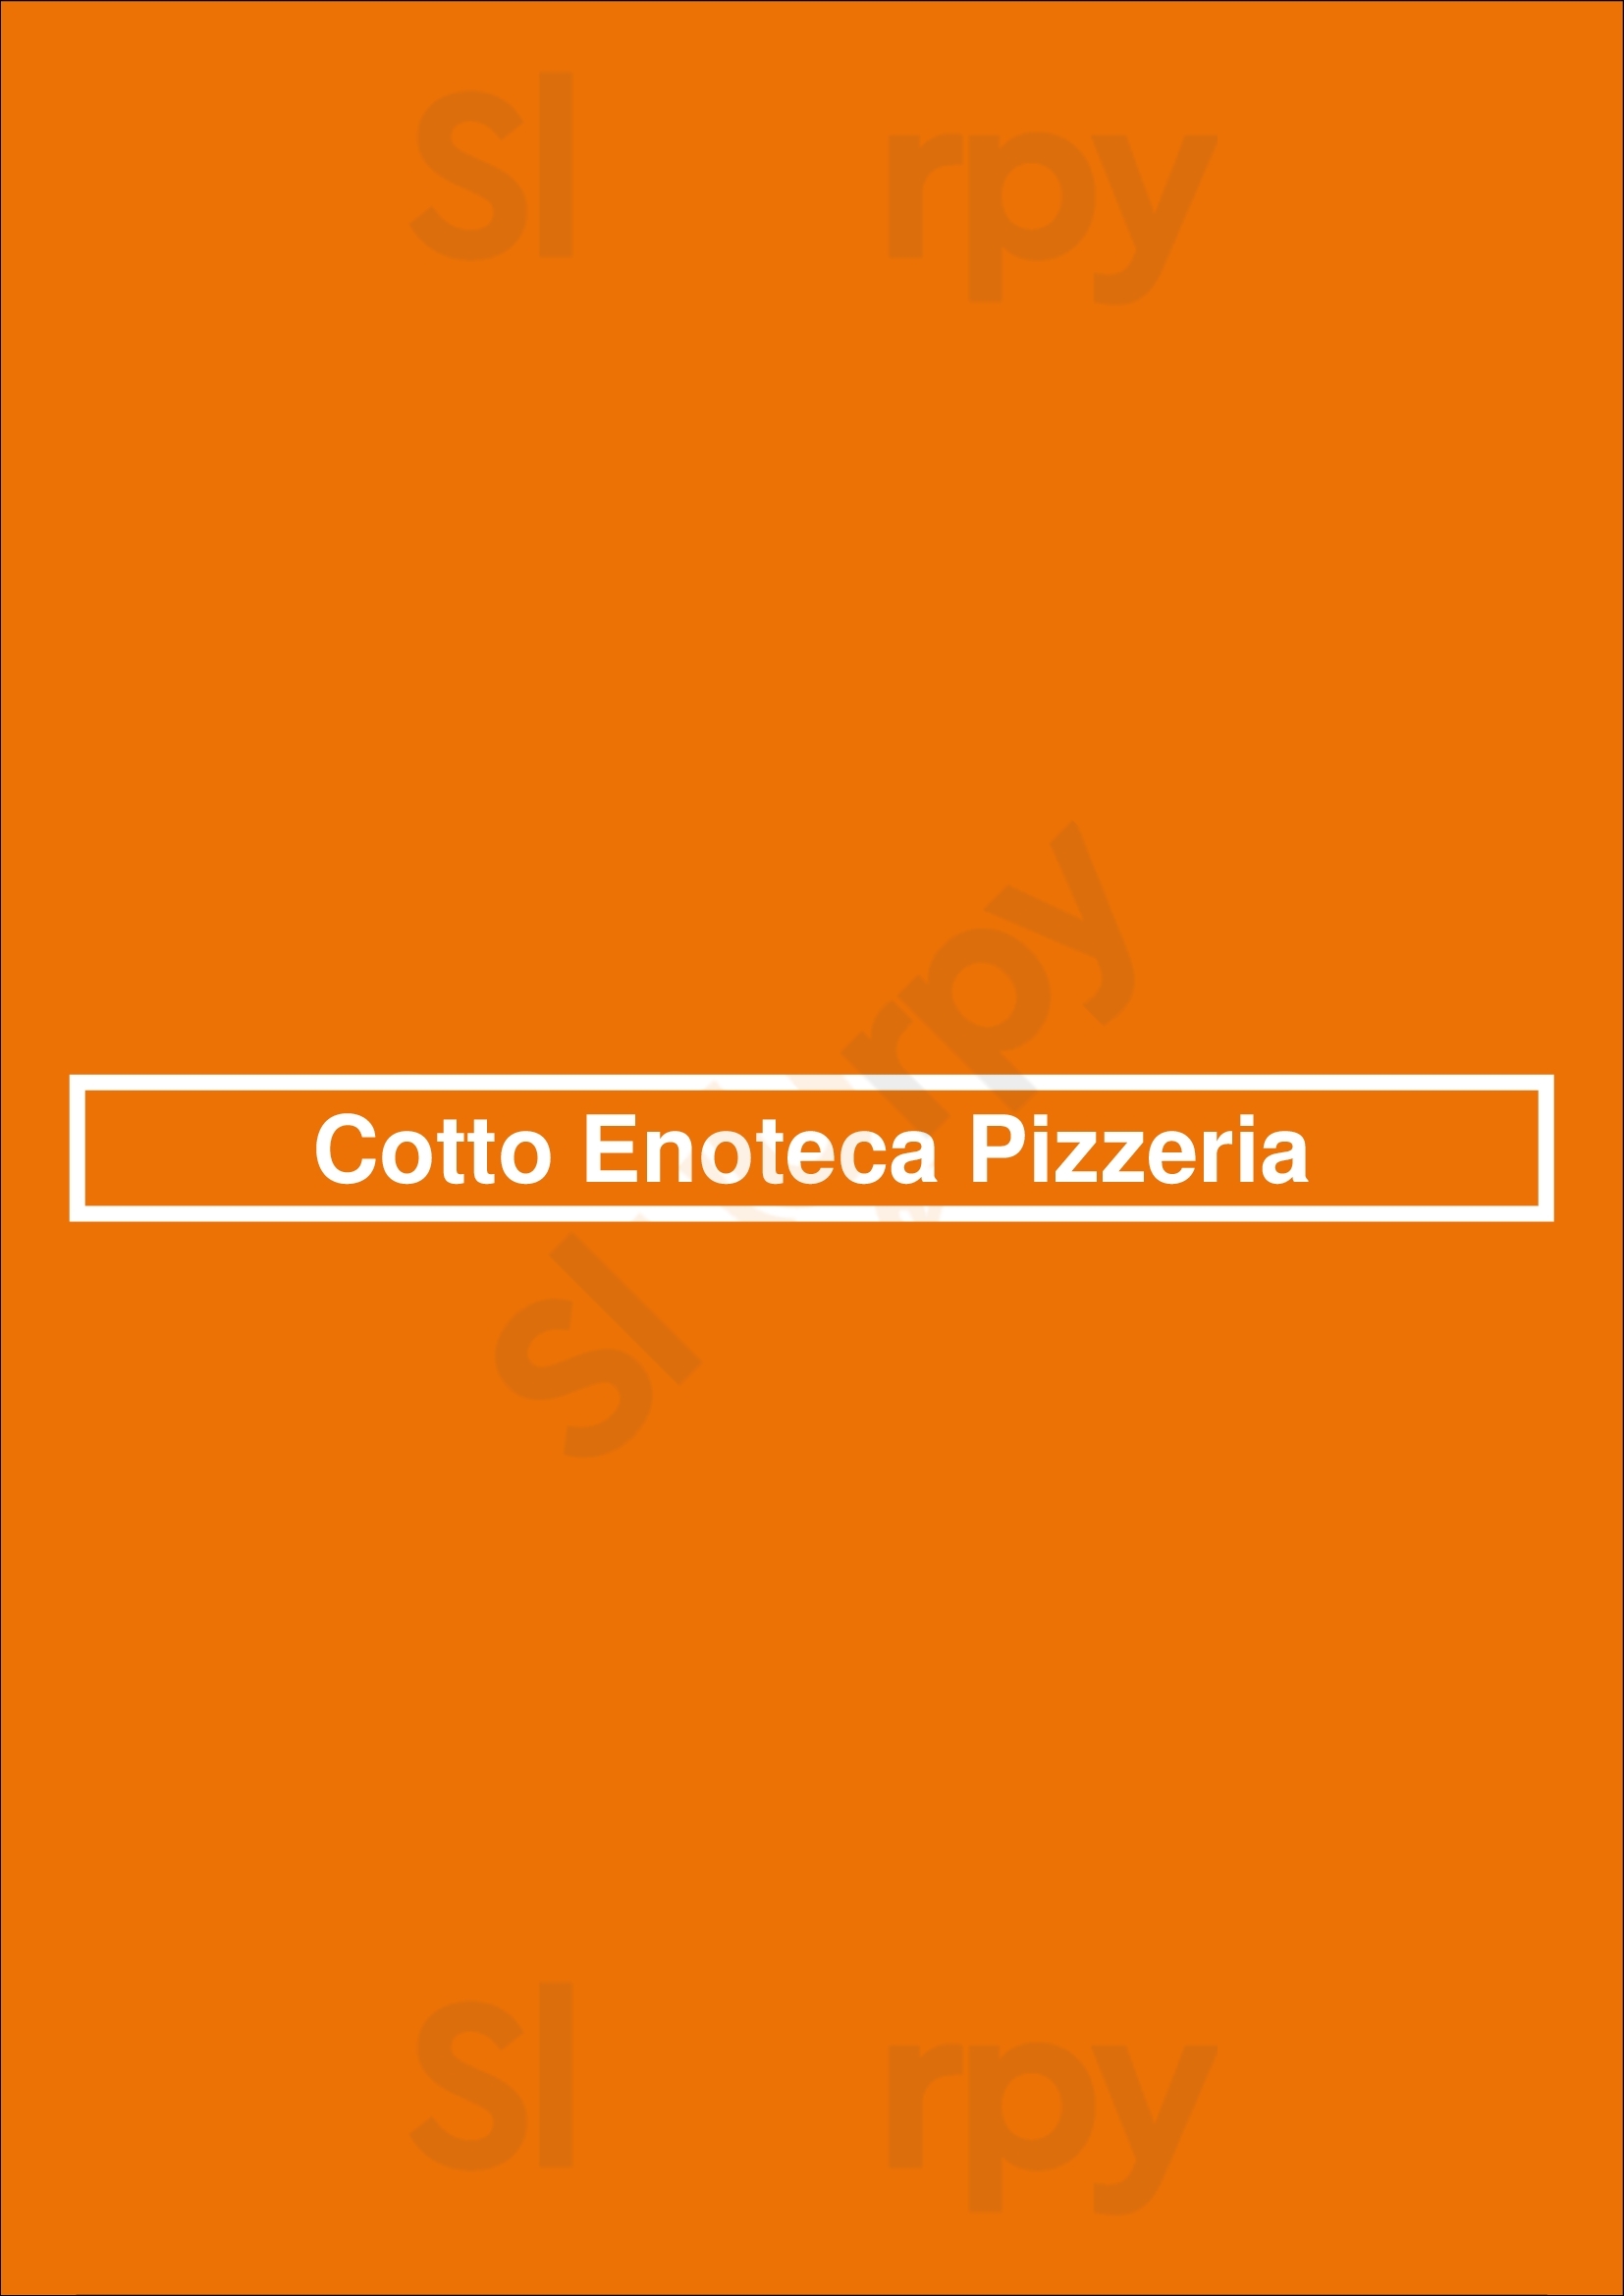 Cotto Enoteca Pizzeria Burnaby Menu - 1